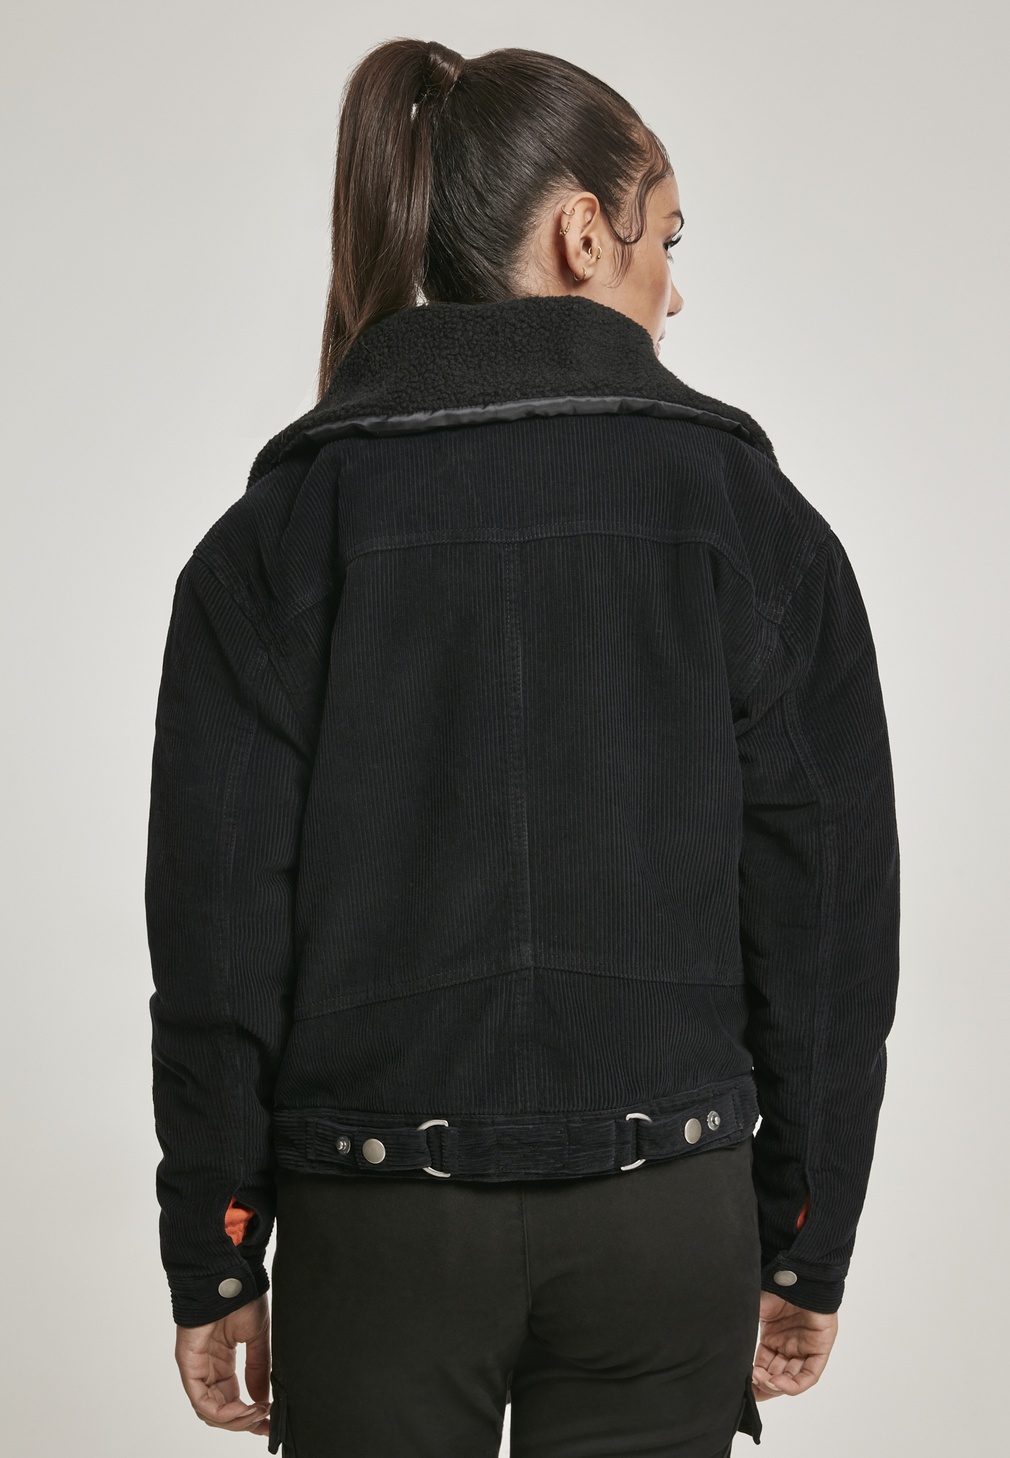 Urban | Jackets | Winter Women Corduroy Sherpa Classics Ladies Black Women | Jacket Lifestyle Jacket Oversized